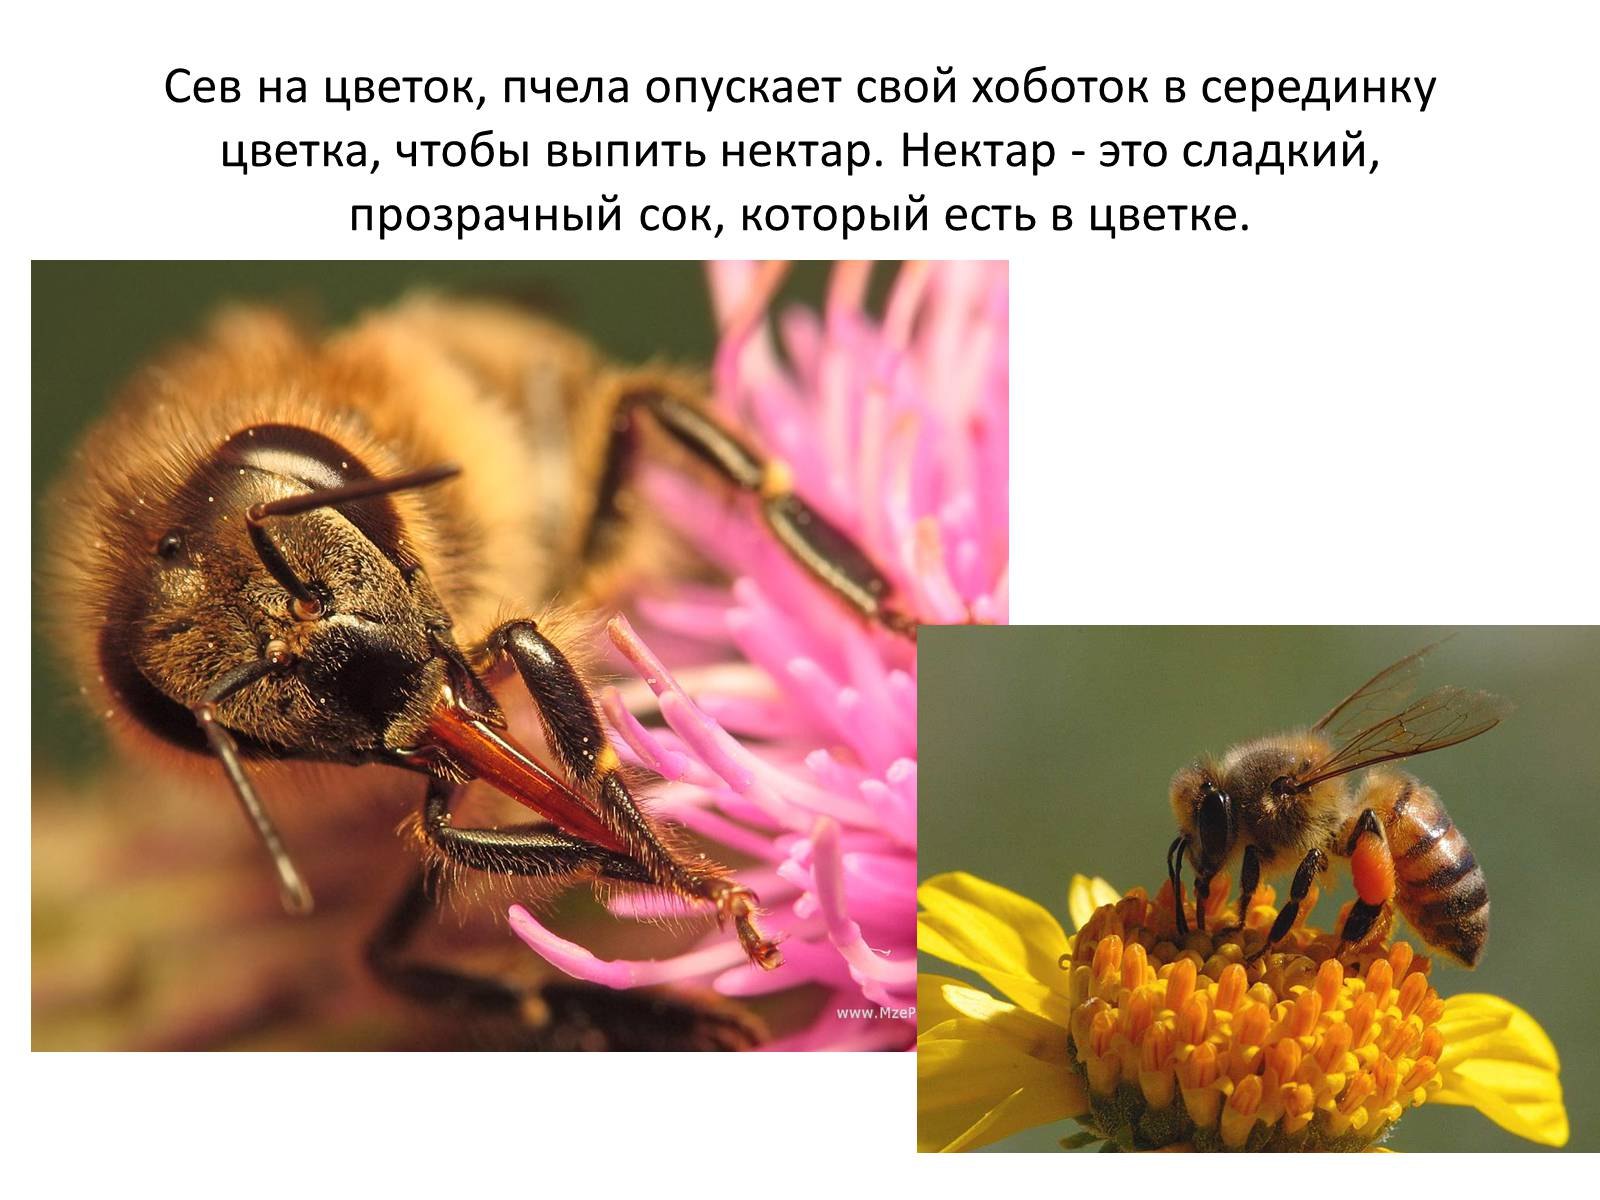 Пчела питается нектаром. Пчела собирает нектар. Хоботок пчелы. Нектар цветы пчелы. Пчела ест нектар.